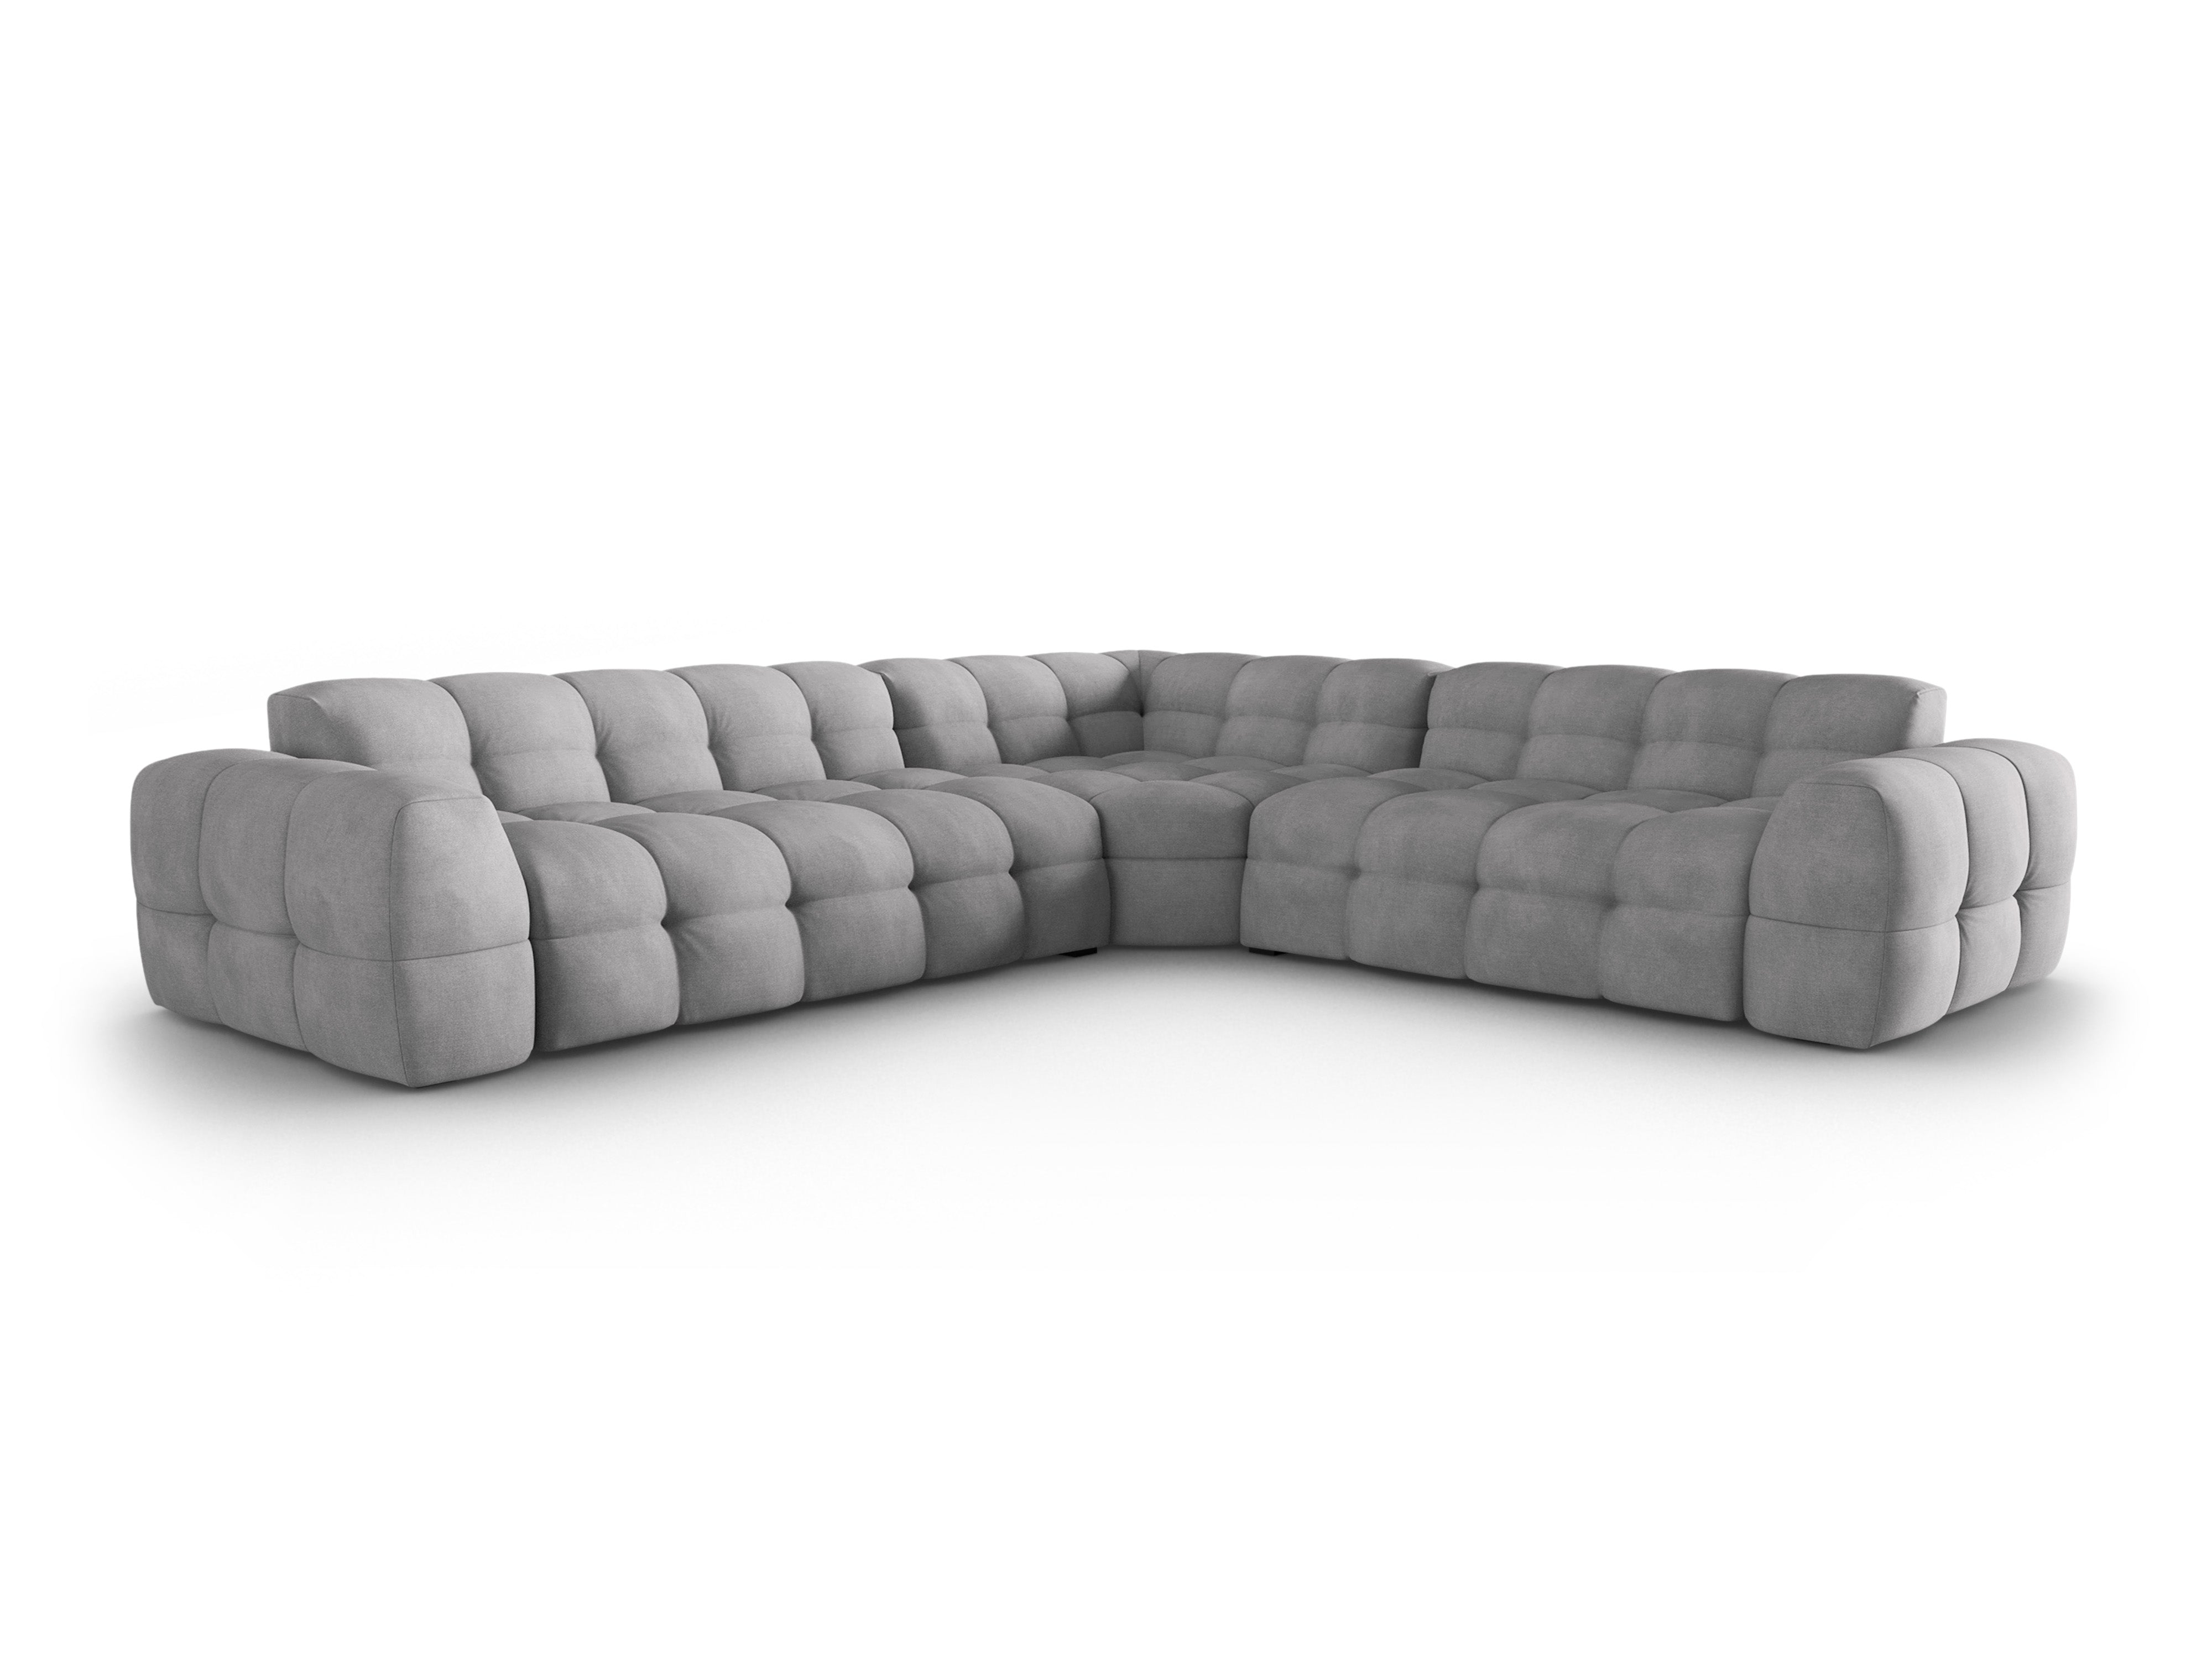 Symmetrical Corner Sofa, "Nino", 5 Seats, 294x294x68
Made in Europe, Maison Heritage, Eye on Design